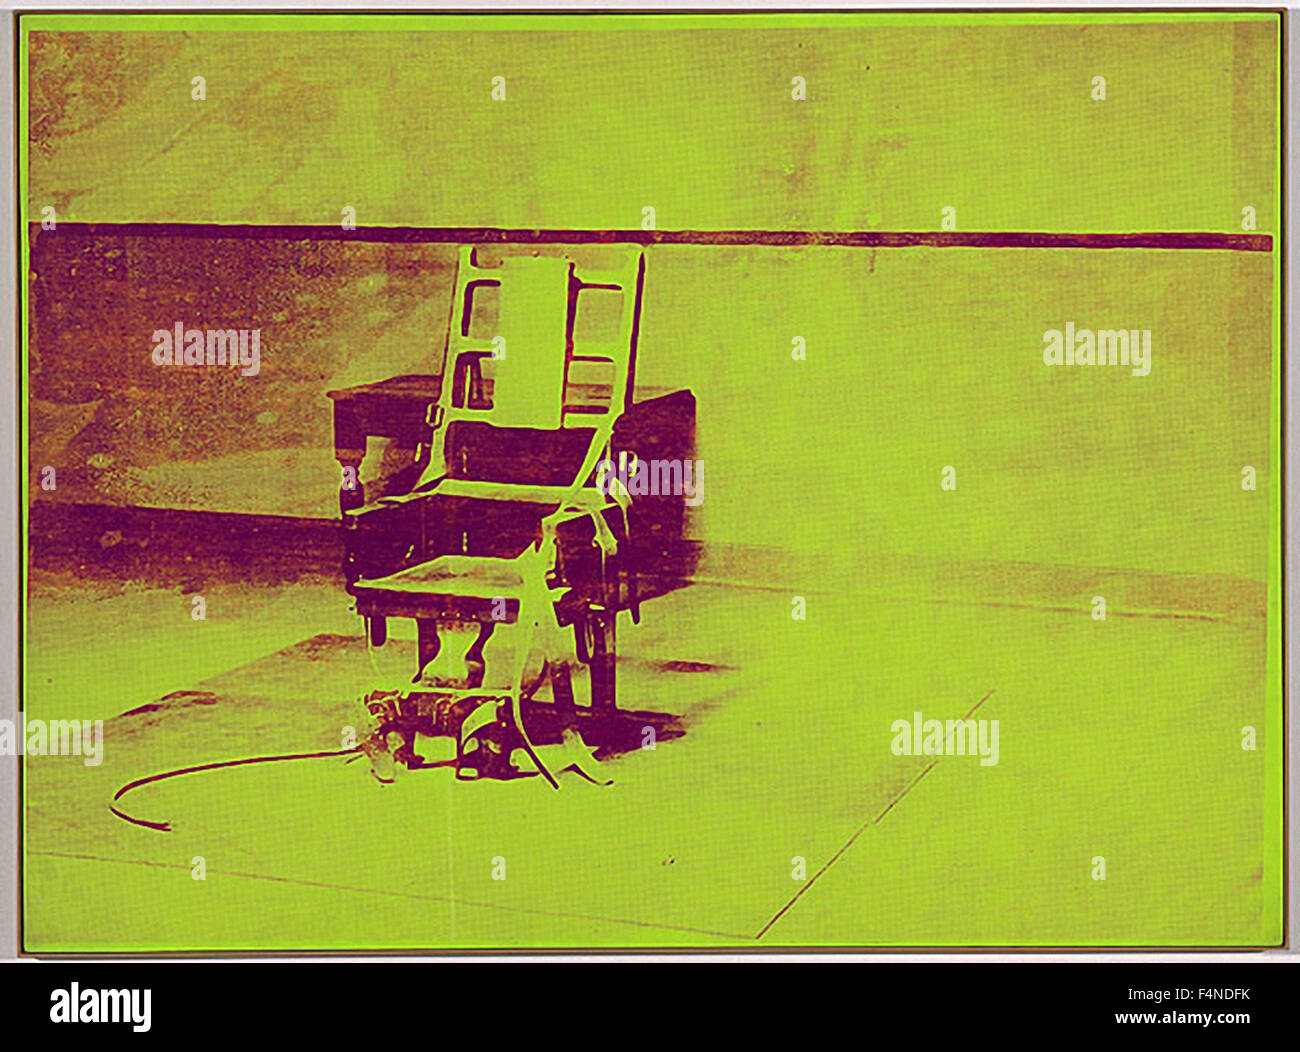 Andy Warhol - sedia elettrica Foto stock - Alamy